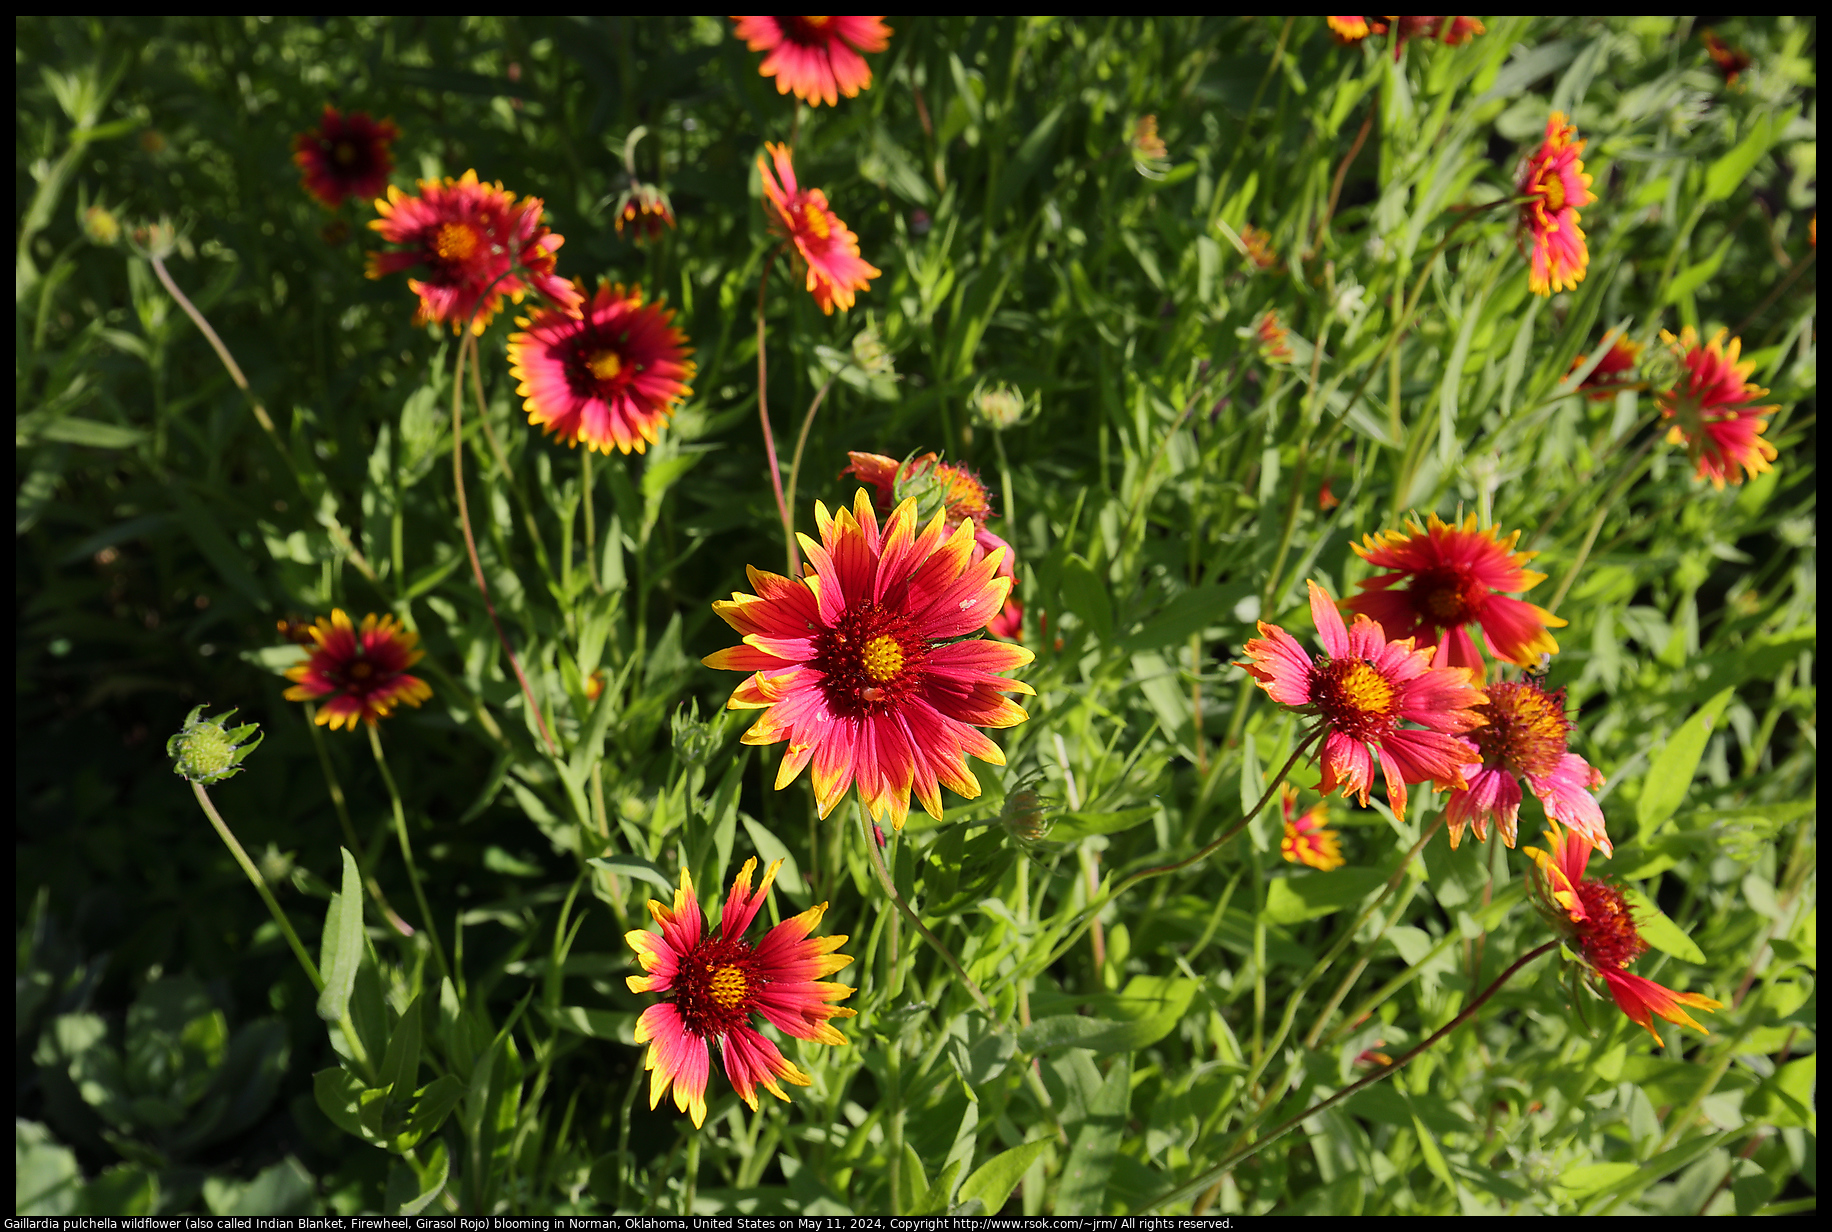 Gaillardia pulchella wildflower (also called Indian Blanket, Firewheel, Girasol Rojo) blooming in Norman, Oklahoma, United States on May 11, 2024